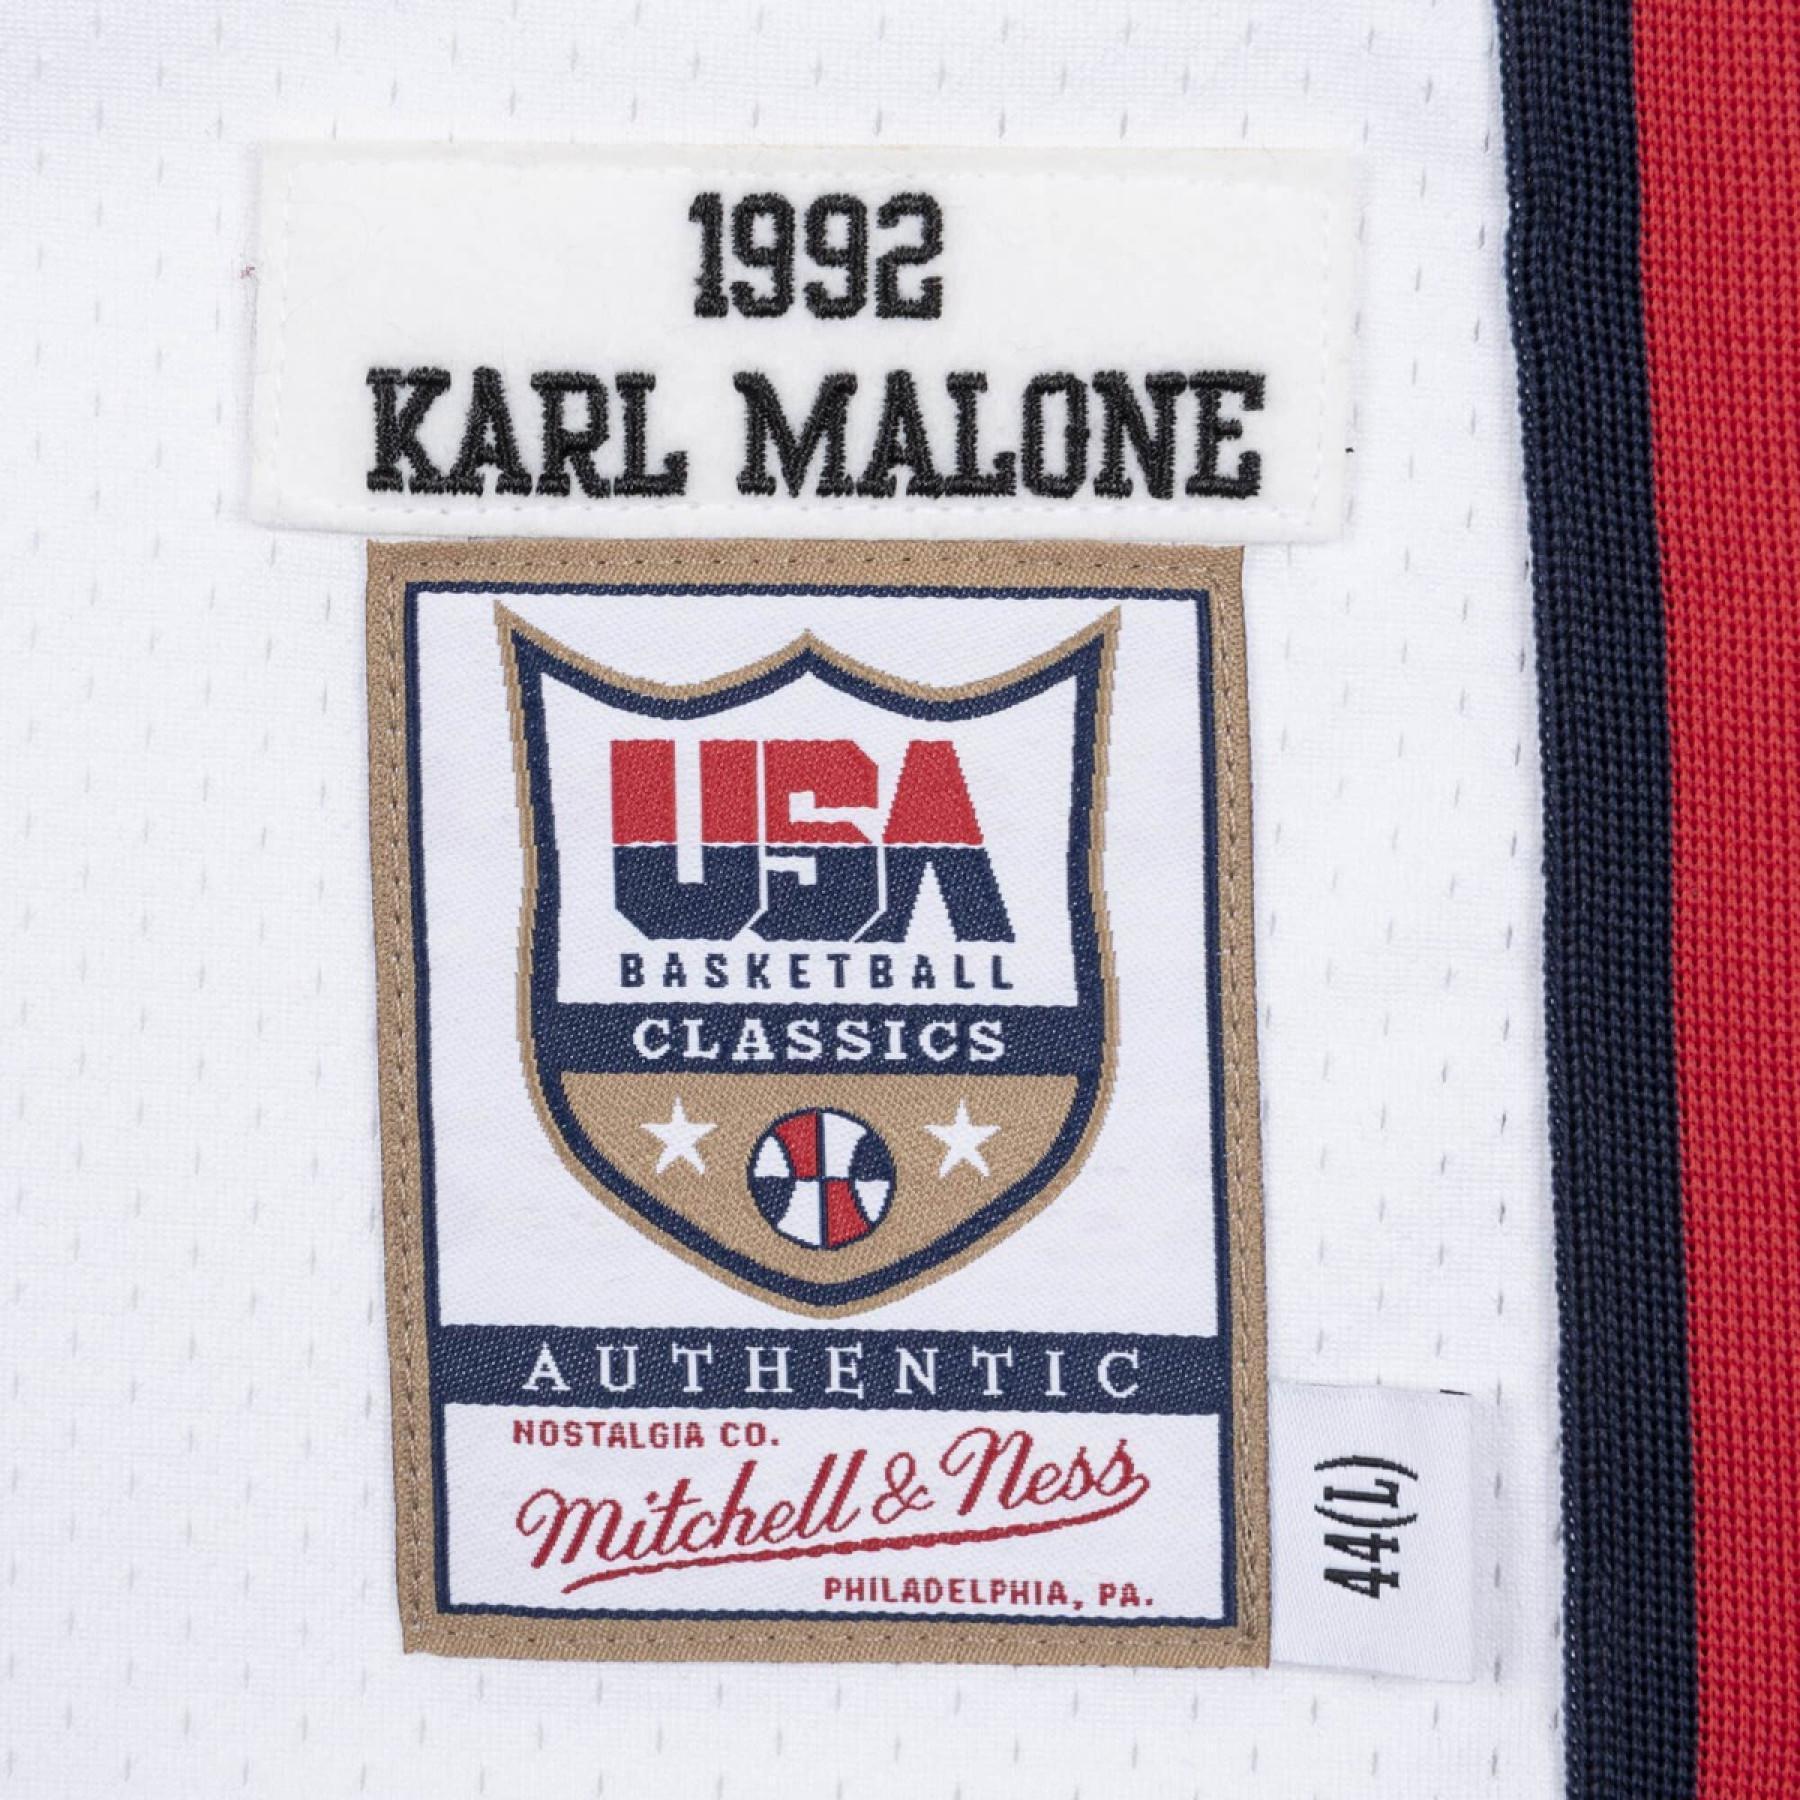 Camiseta auténtica del equipo USA Karl Malone 1992